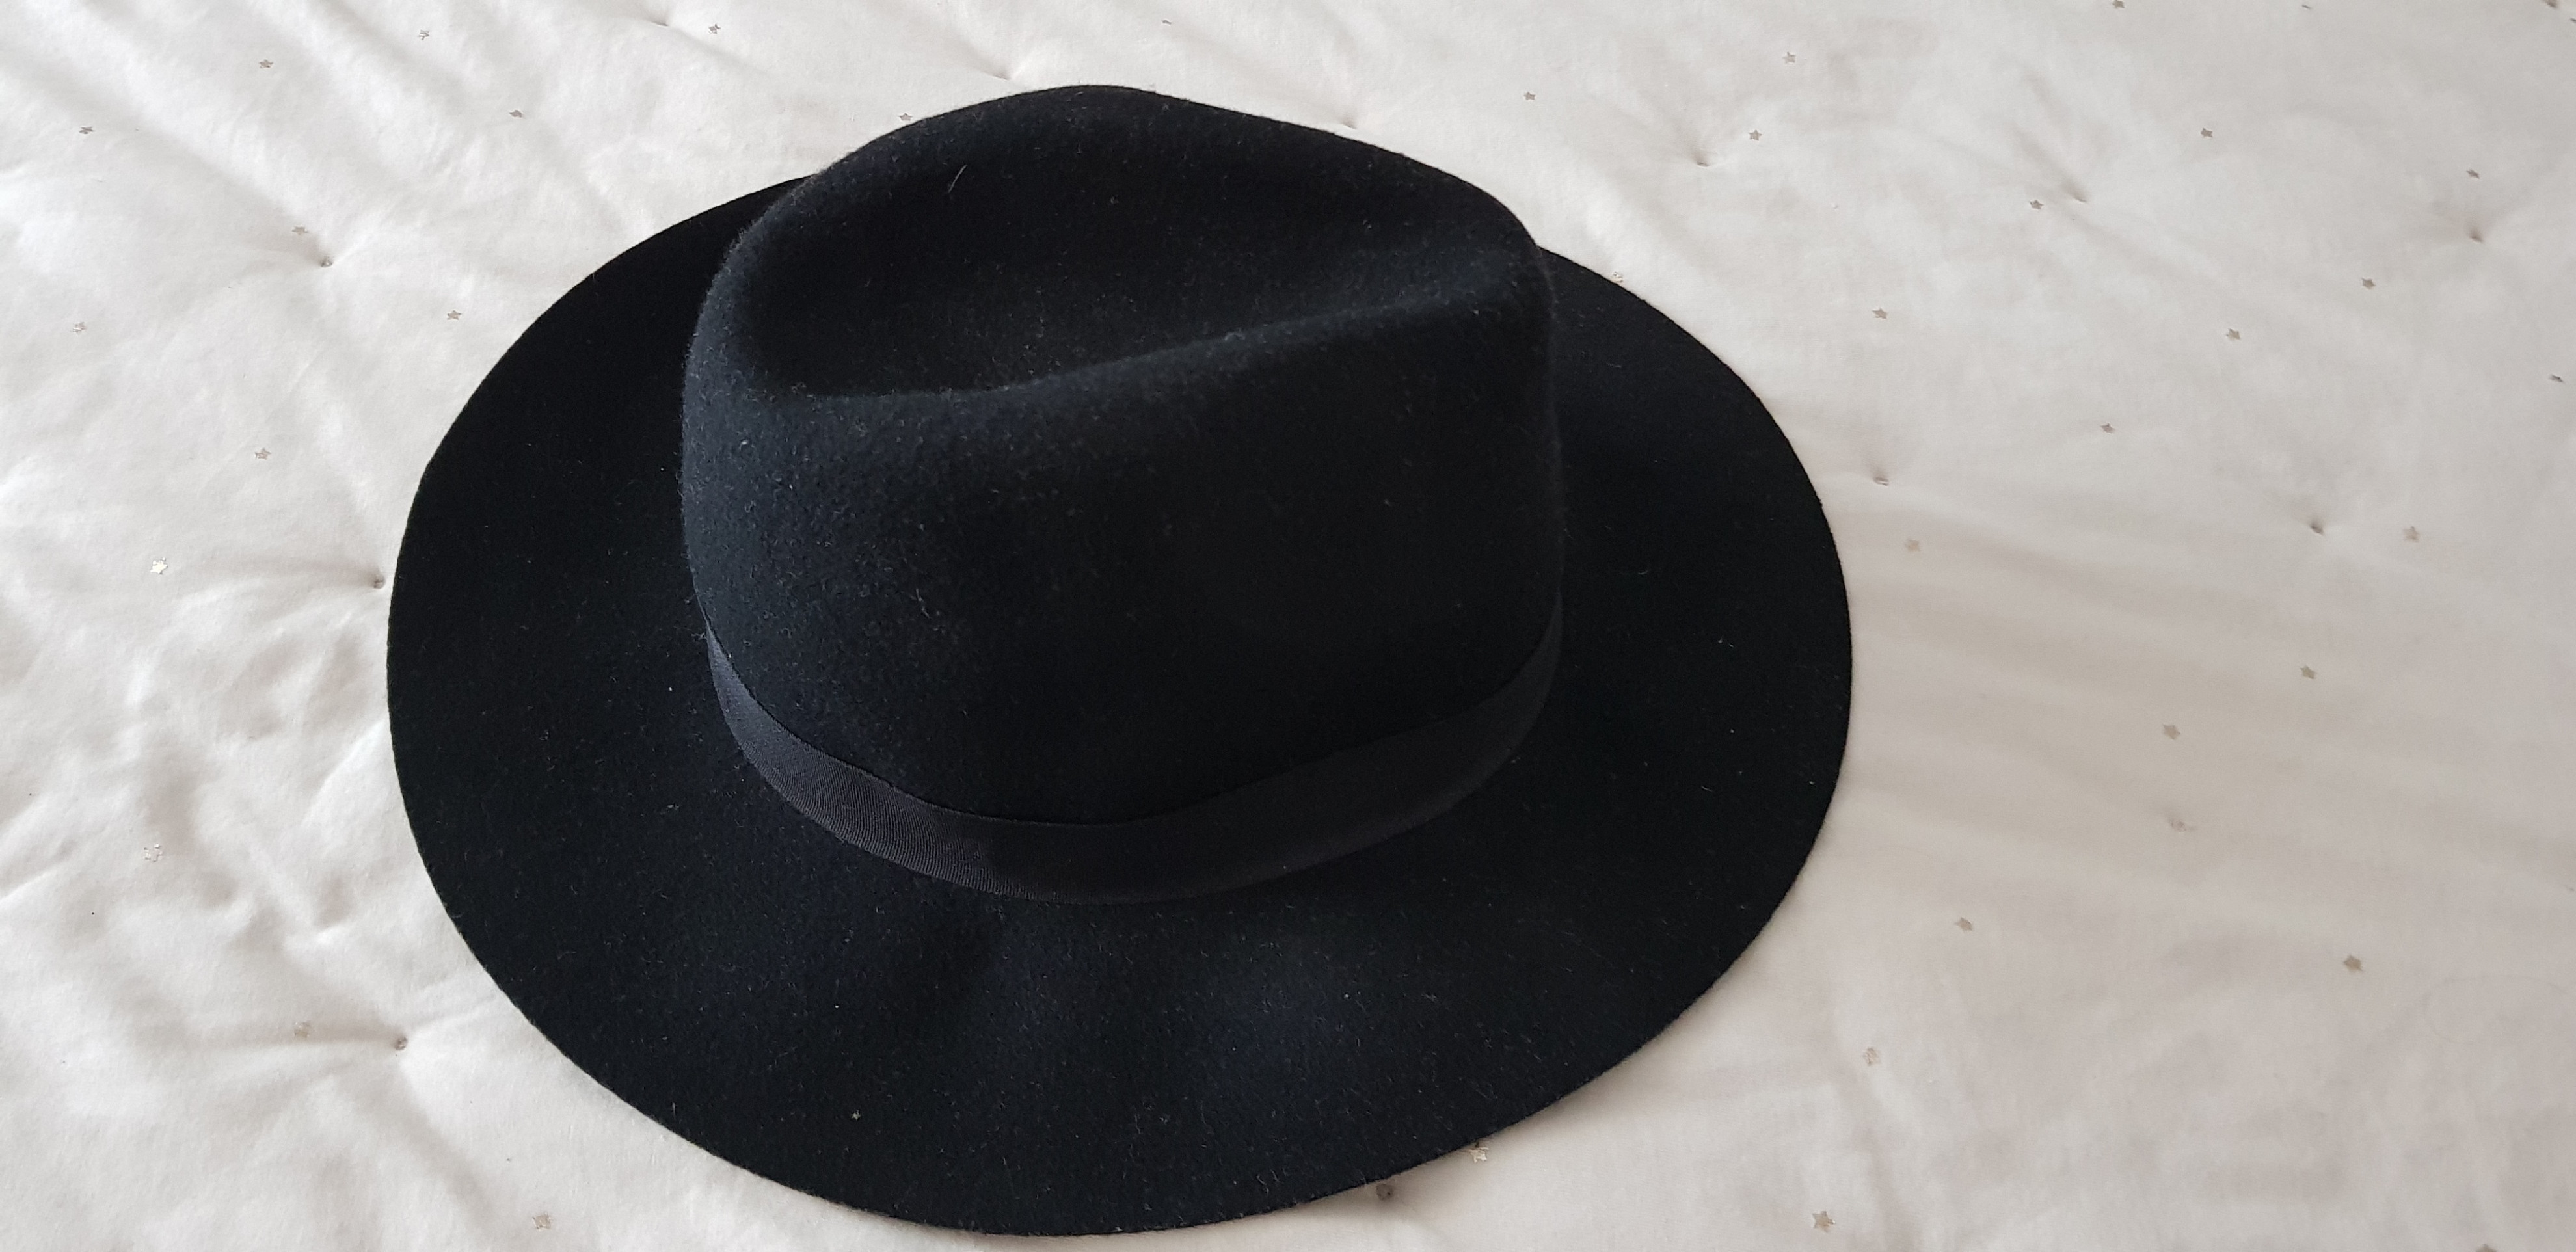 Black felt hat